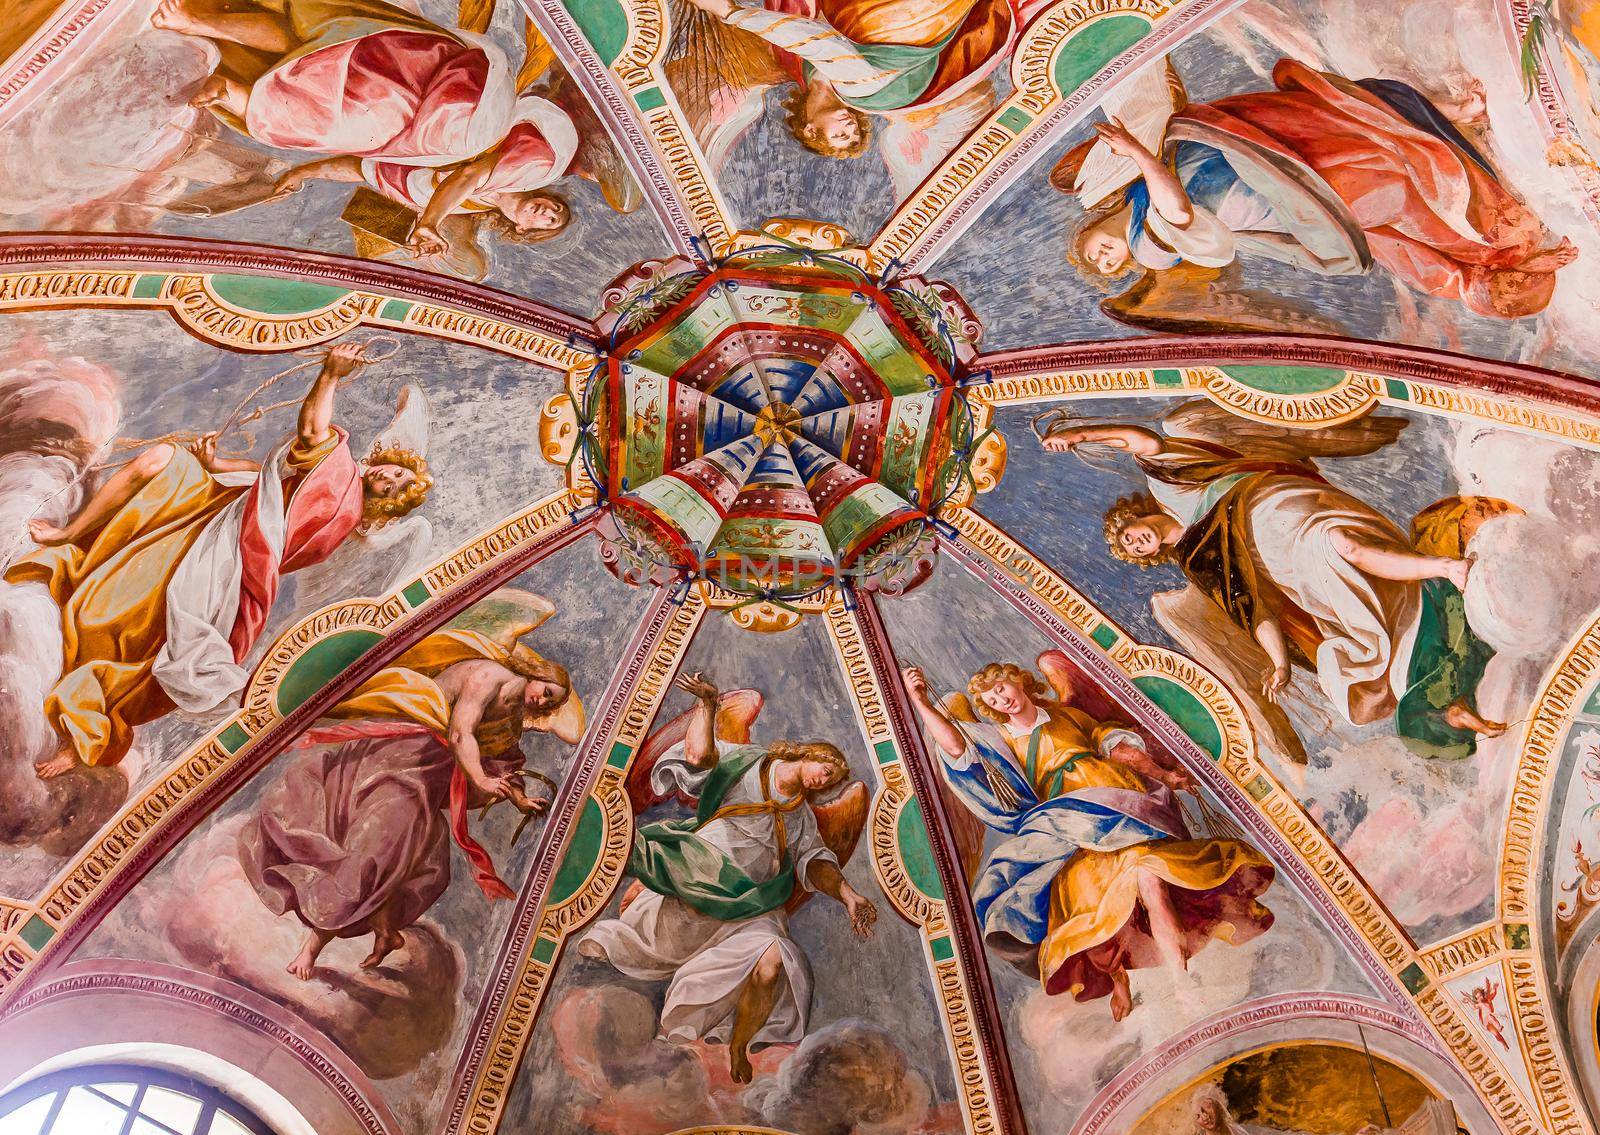 Chapel of Sacro monte di Orta, Orta san Giulio, italy by photogolfer